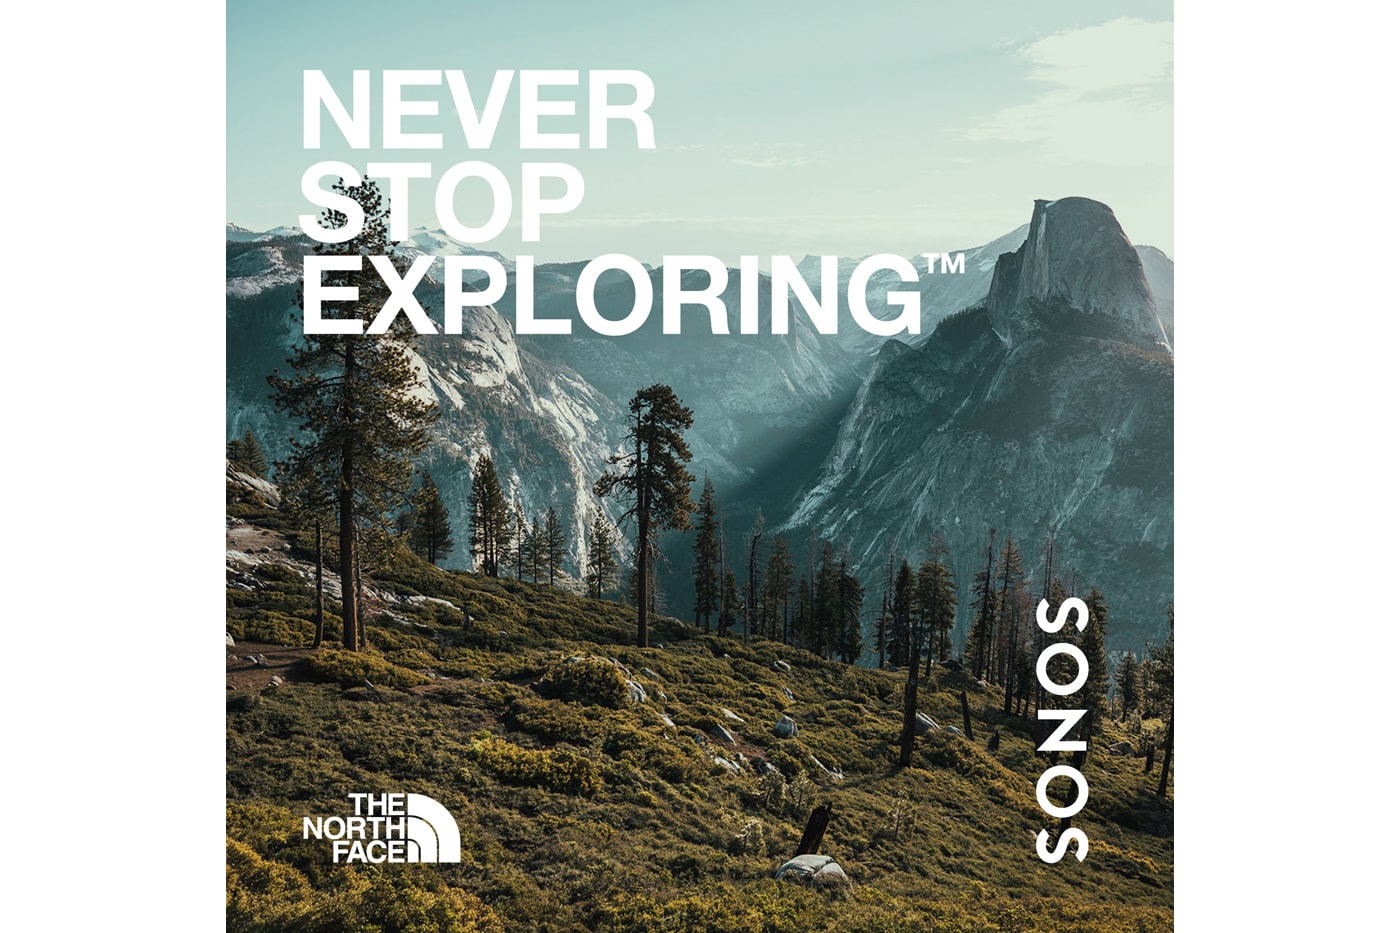 The North Face Sonos Radio Station Nine Soundscapes Tateyama Mountains Shomyo Falls Sawanbori japan expedition adventure Premiere Debut Release